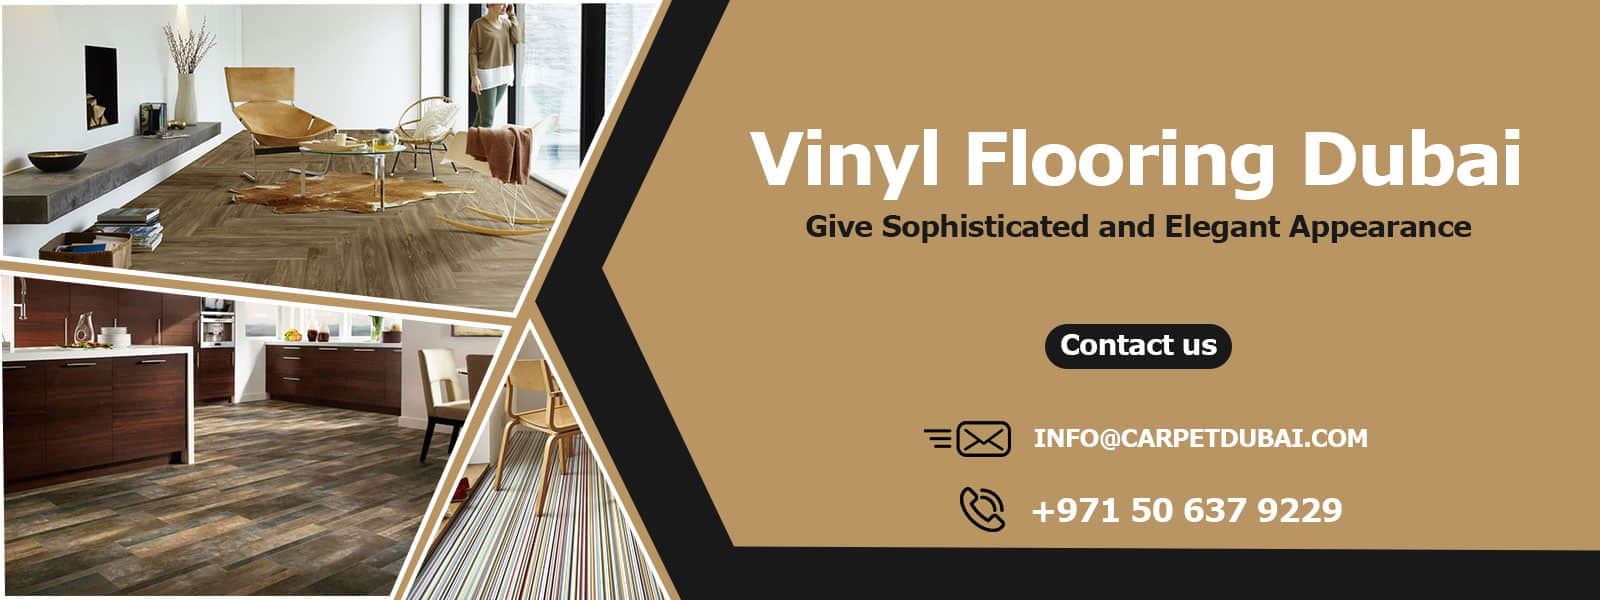 Vinyl-Flooring-Dubai banner